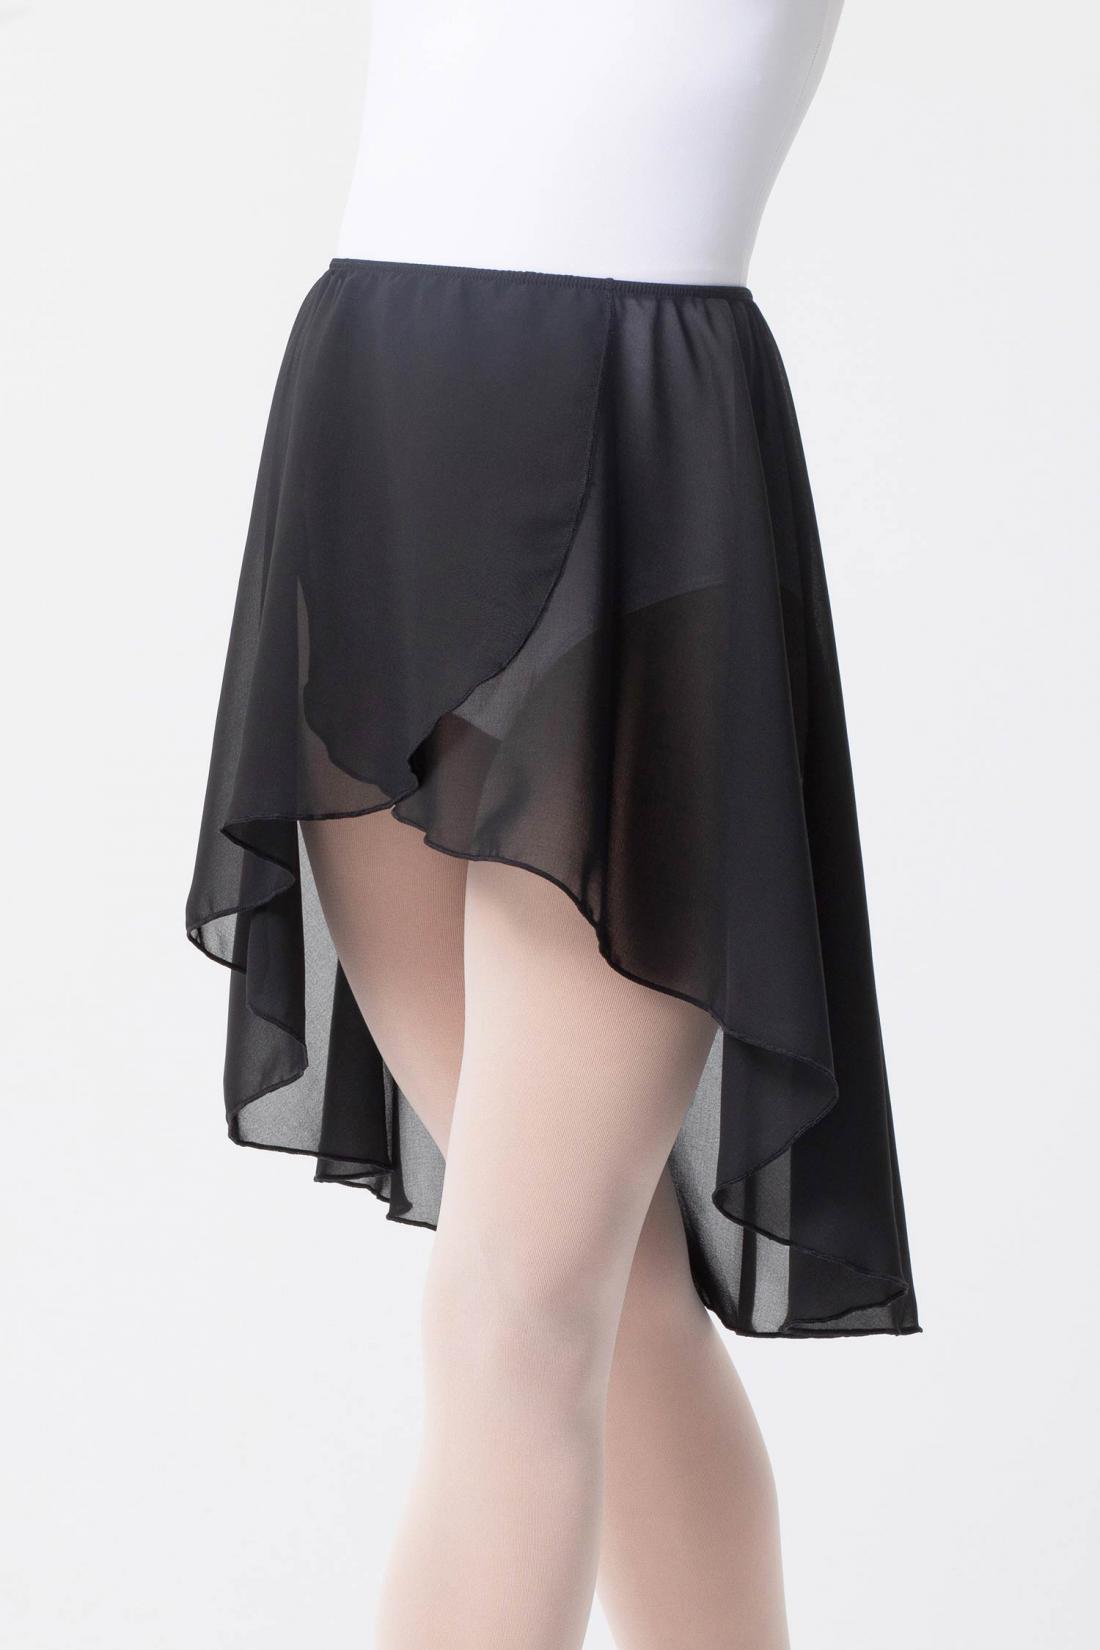 Intermezzo tail hem black skirt...